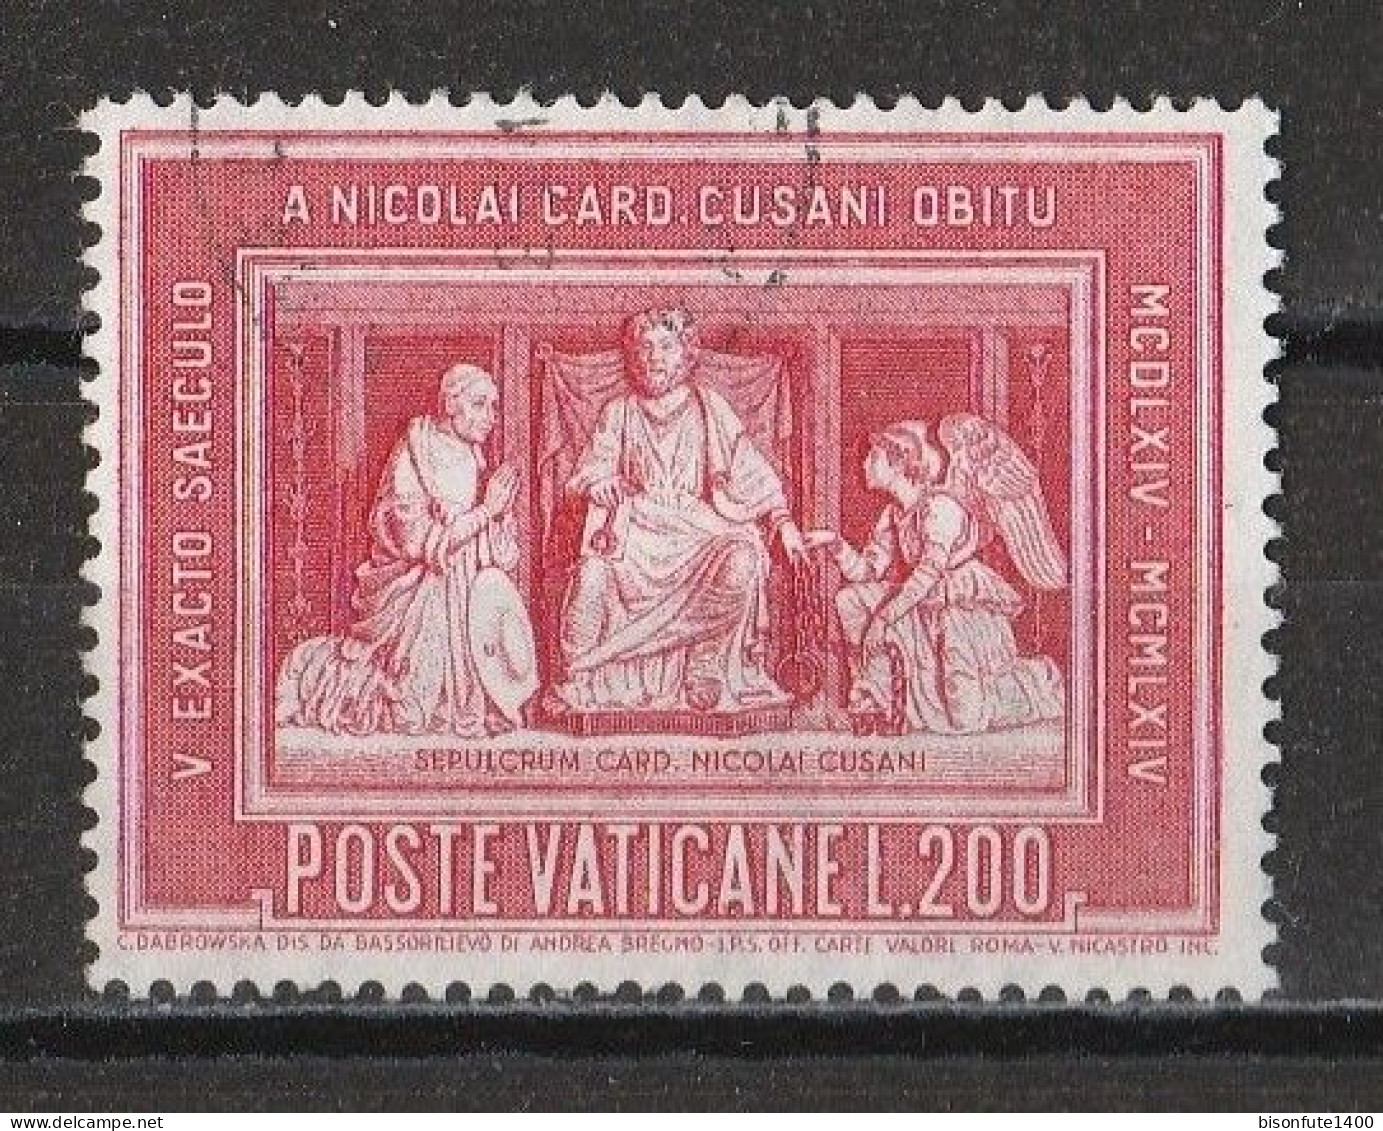 Vatican 1964 : Timbres Yvert & Tellier N° 405 - 406 - 407 - 408 - 409 - 410 - 411 - 412 - 413 Et 414 Oblitérés. - Usados